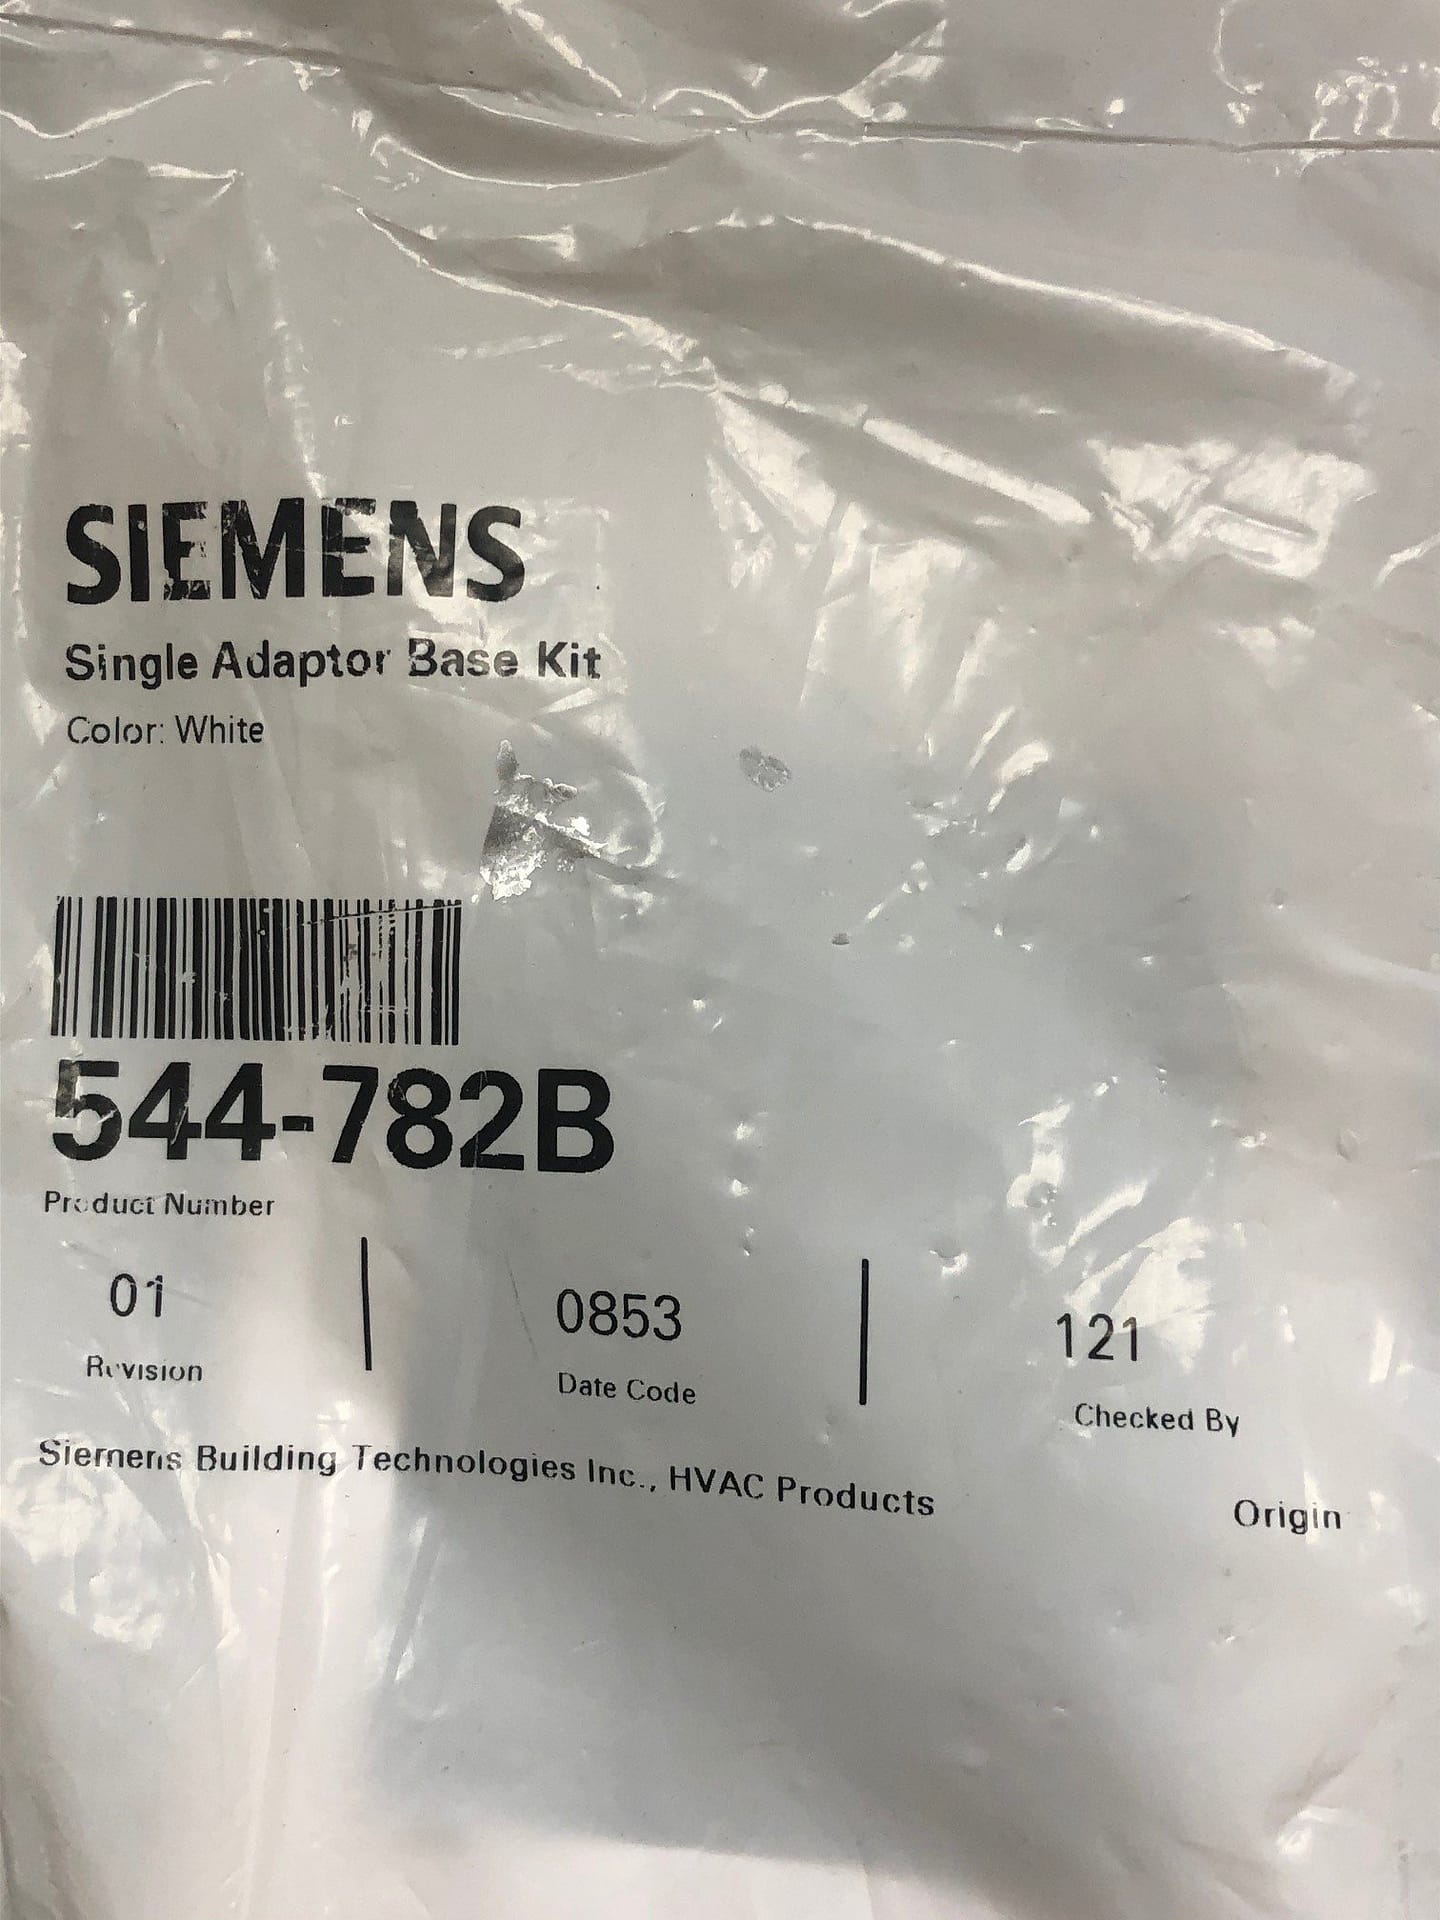 Siemens 544-782B